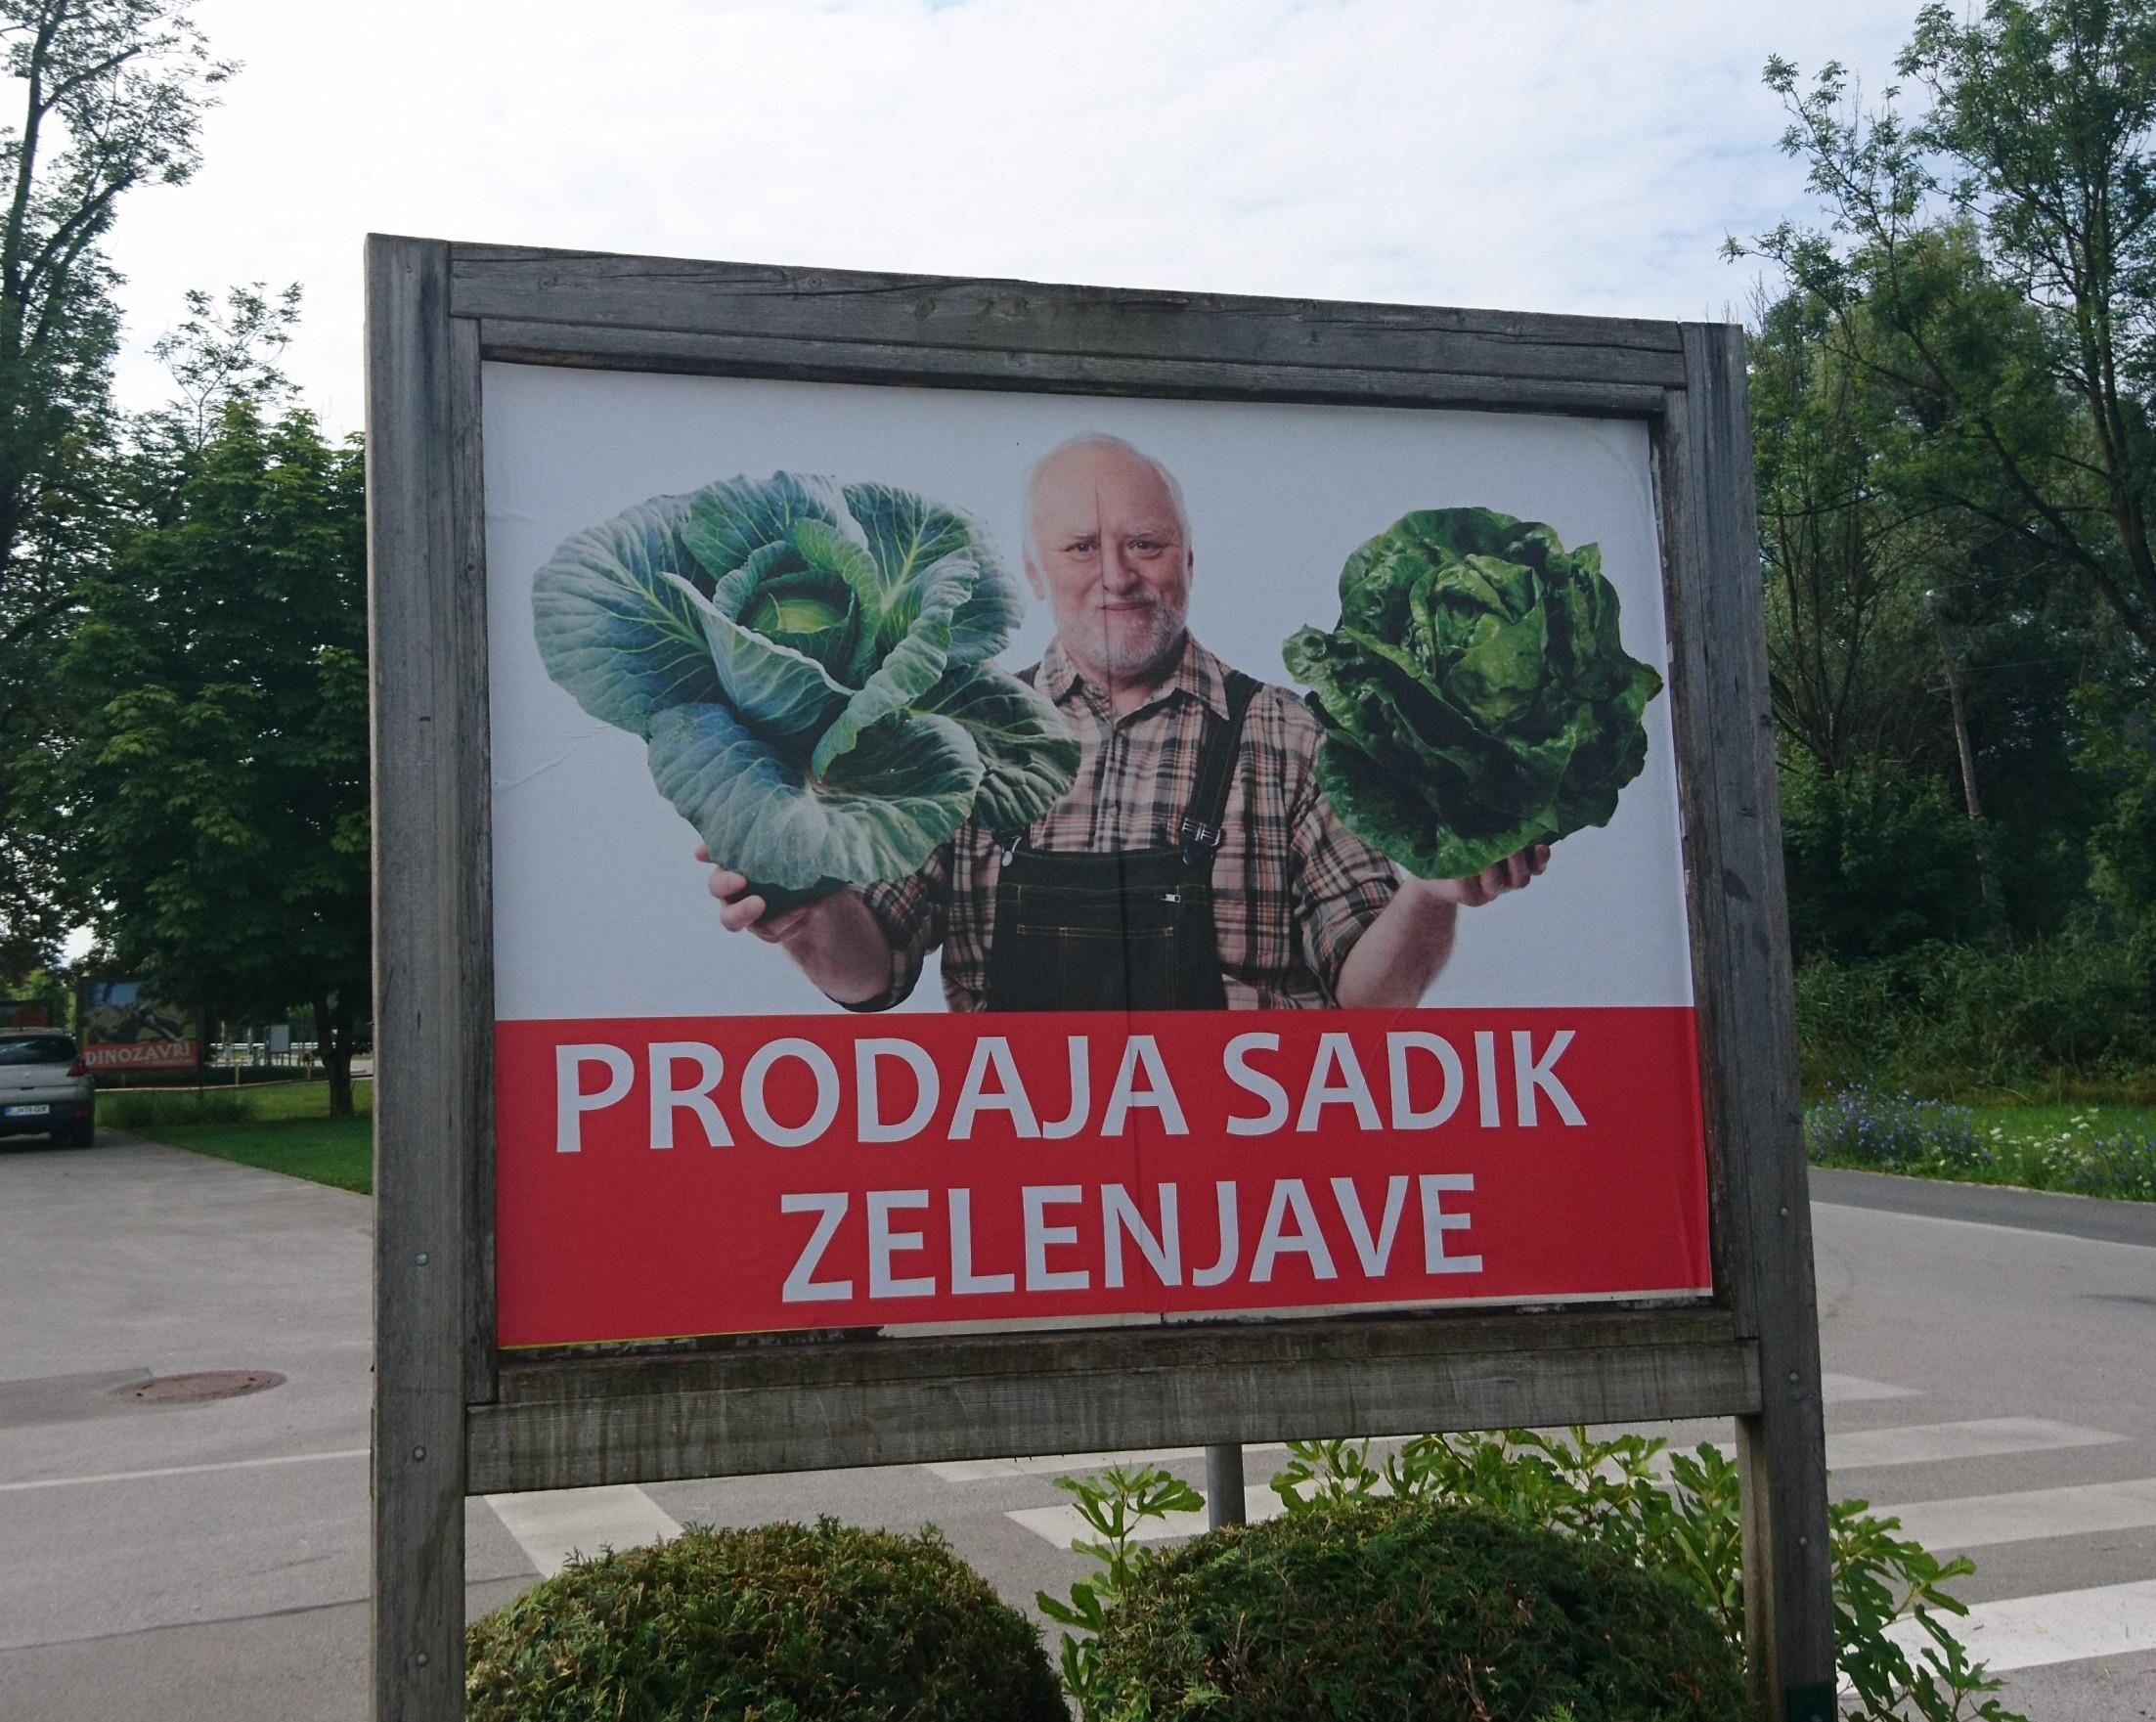 Caught Herold slinging veg in Slovenia. 